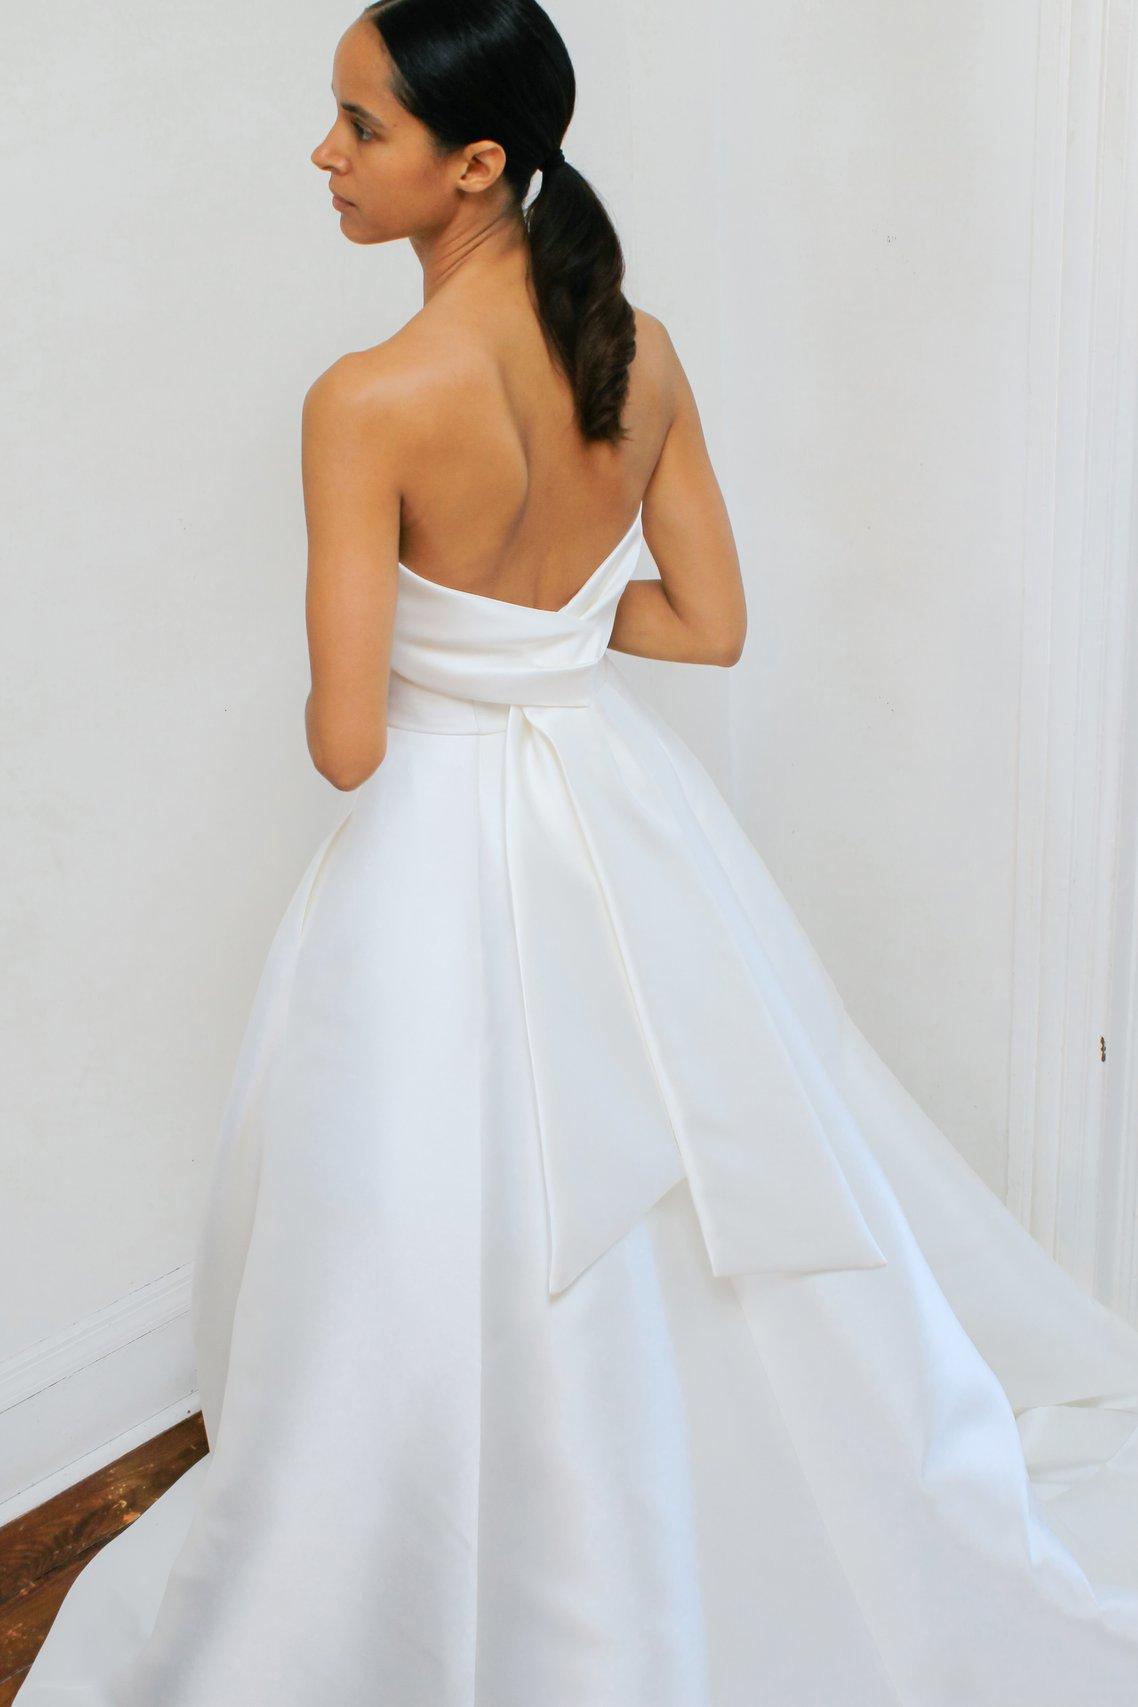 8 Wedding Dress Fabrics Every Bride Should Be Familiar With